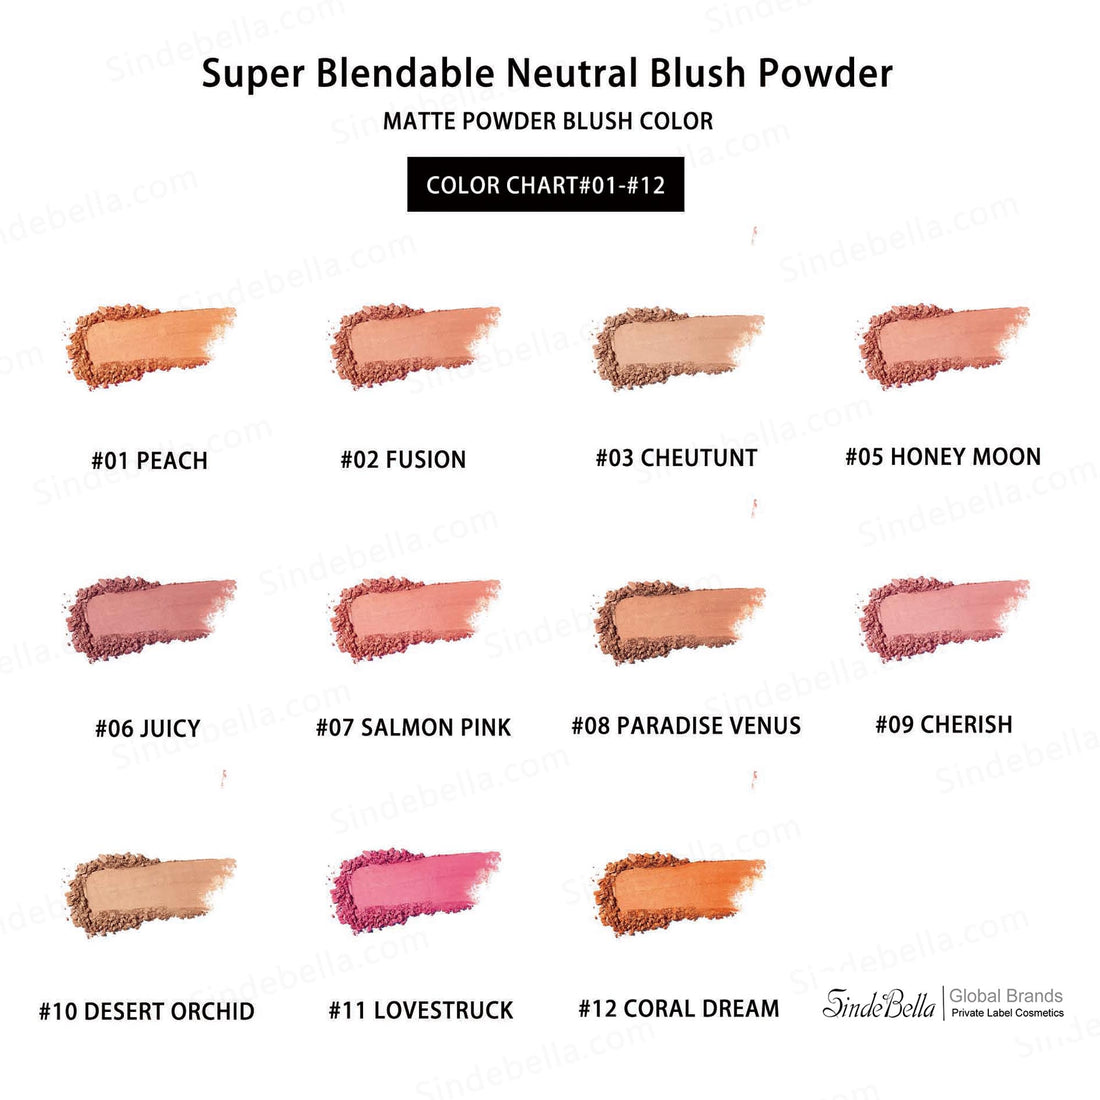 Super Blendable Neutral Blush Powder